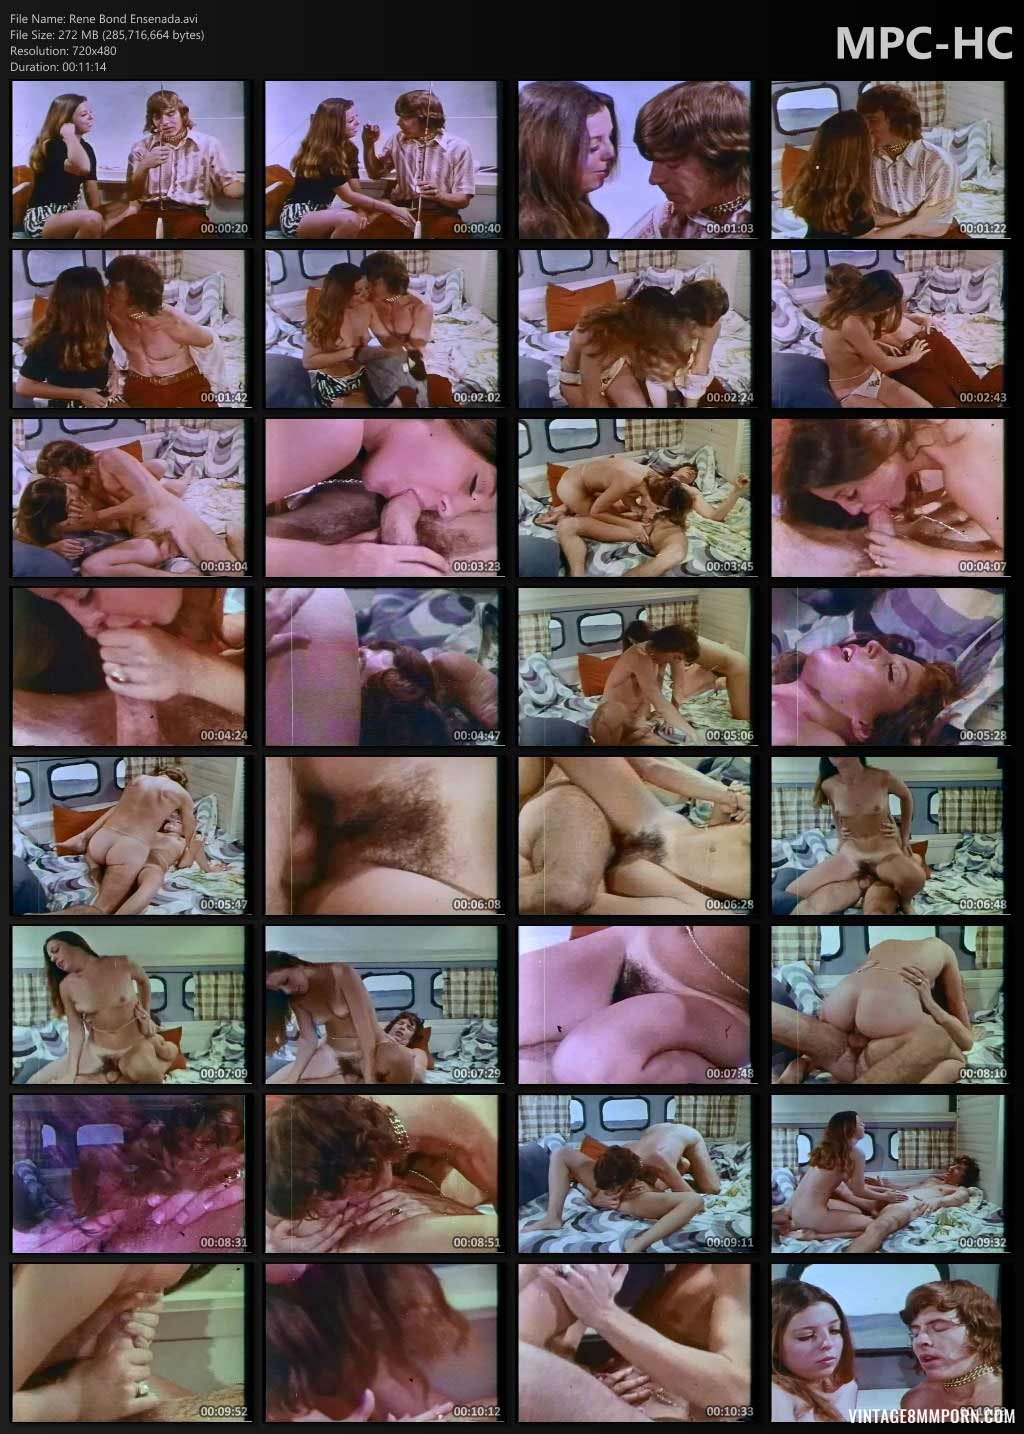 Rene Bond Ensenada » Vintage 8mm Porn, 8mm Sex Films, Classic Porn, Stag  Movies, Glamour Films, Silent loops, Reel Porn